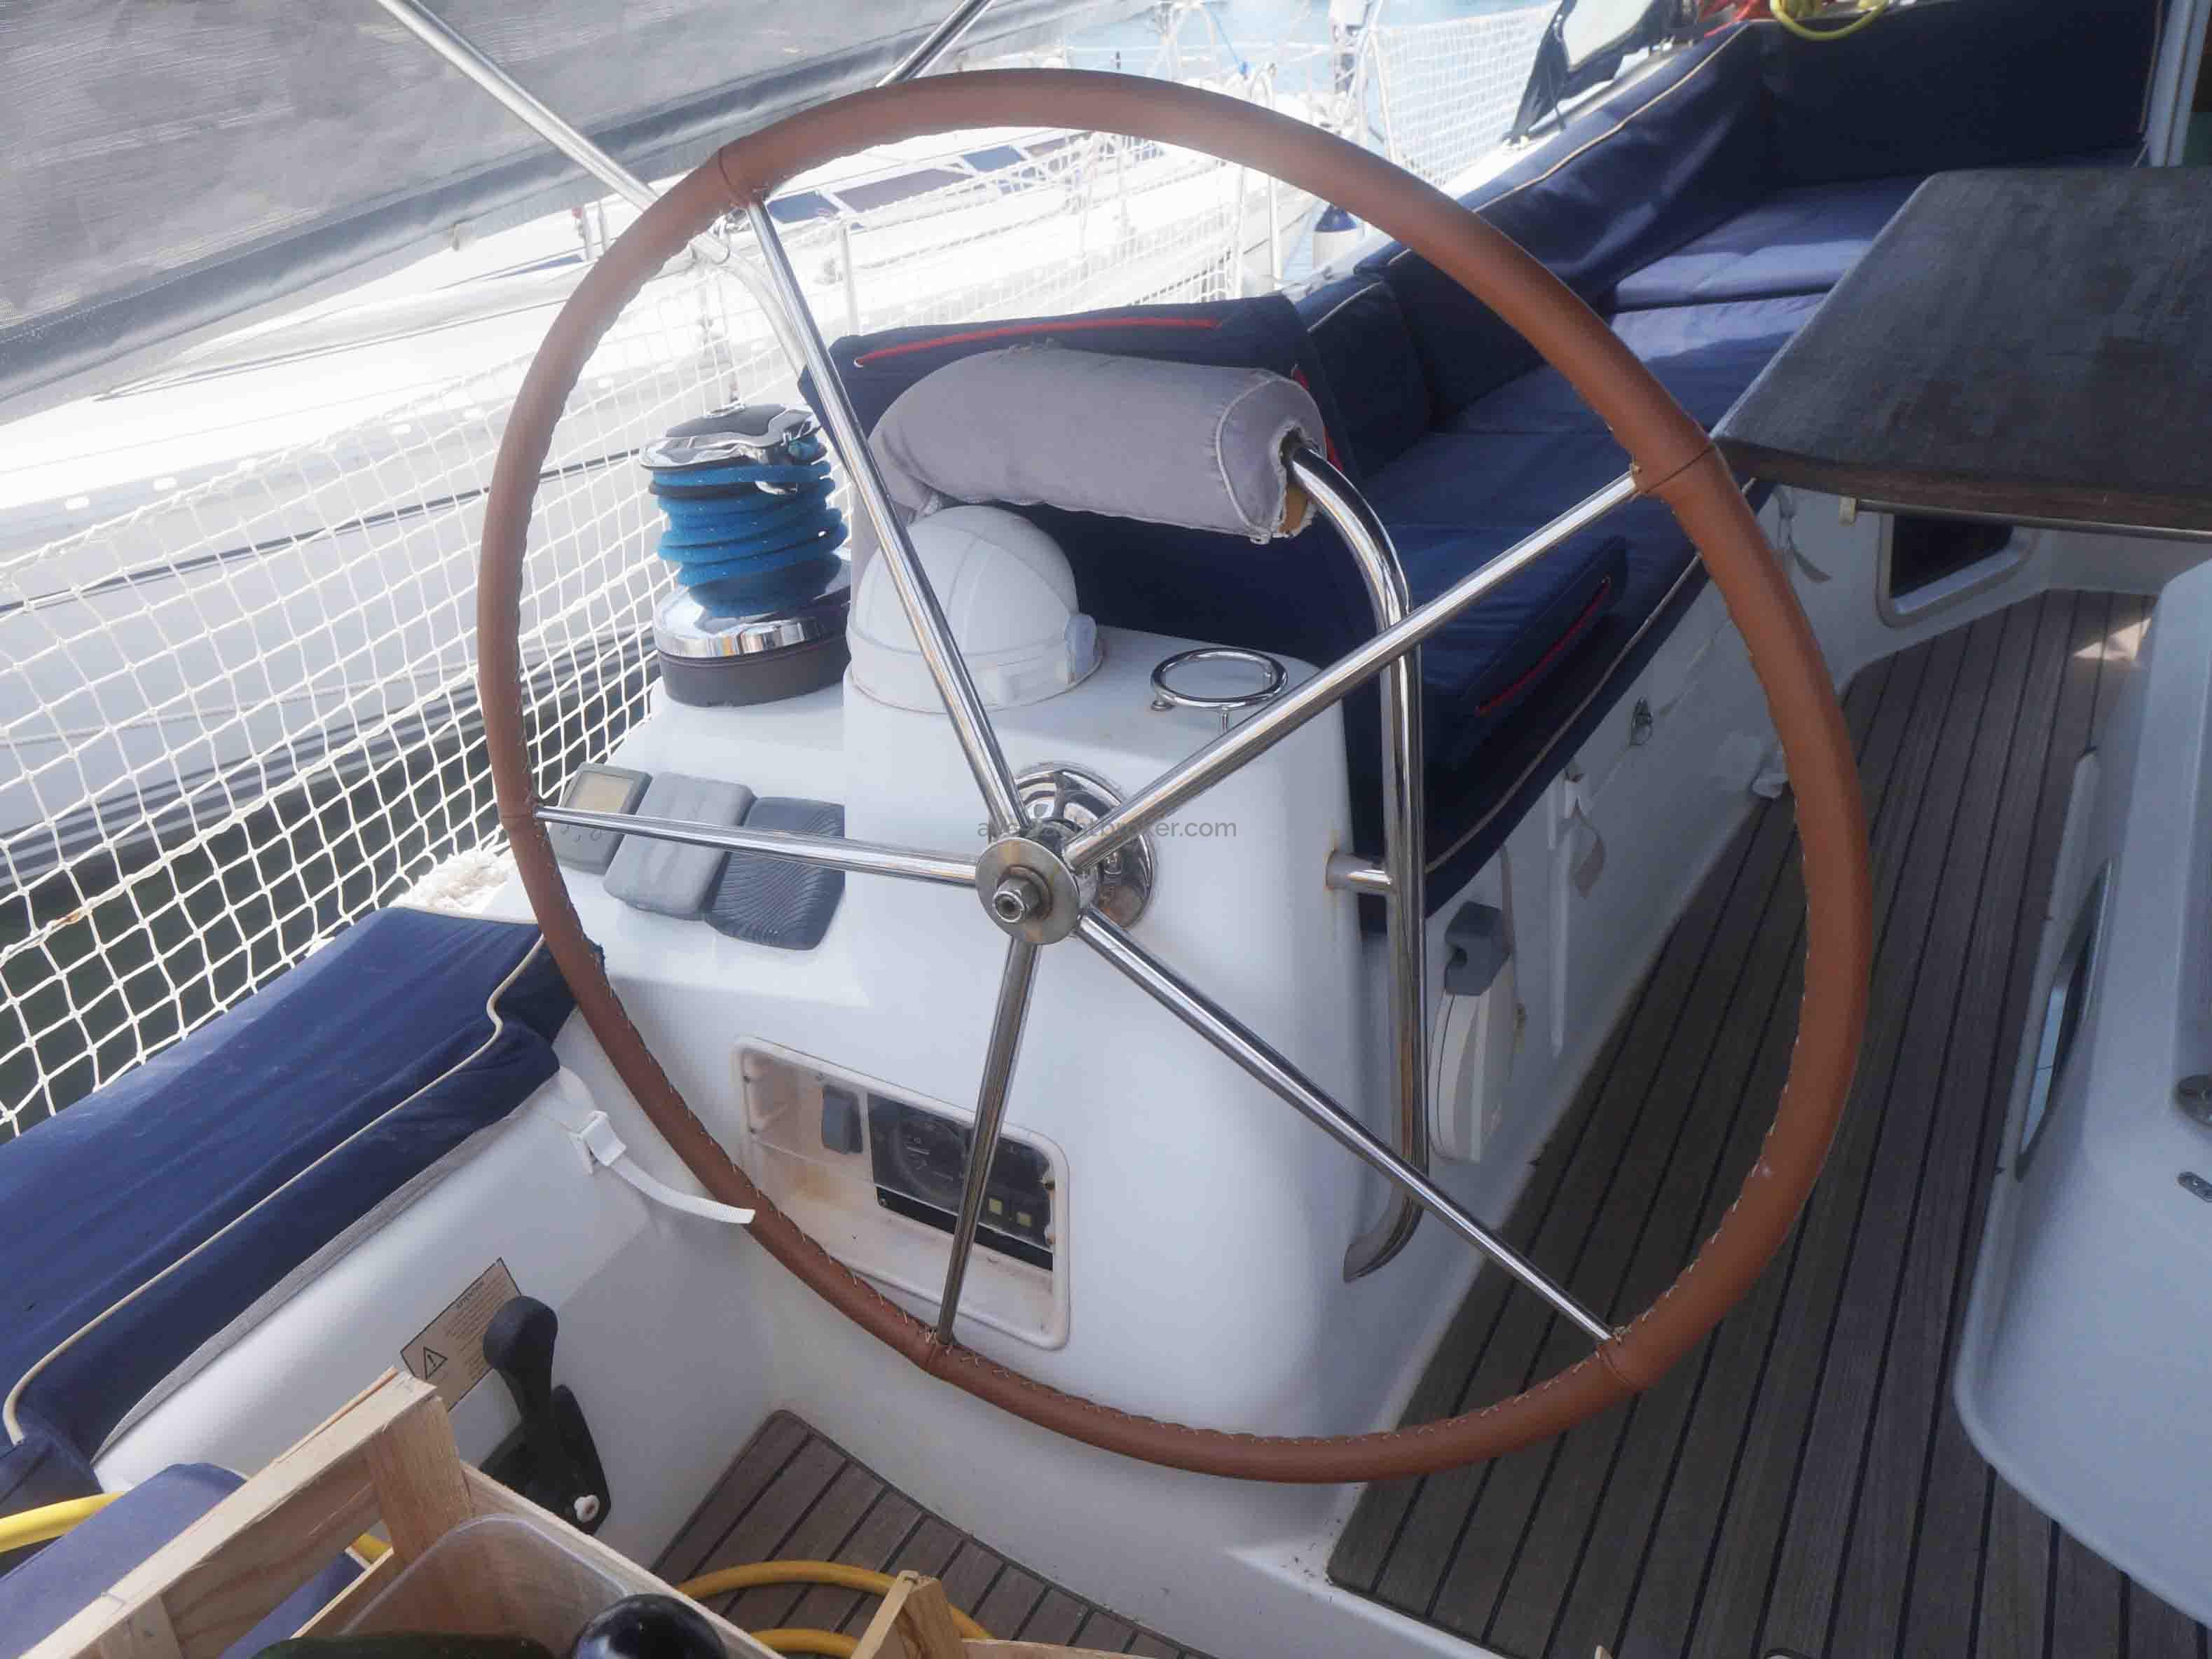 AYC – Yacht broker - SUN ODYSSEY 50 DS PERFORMANCE